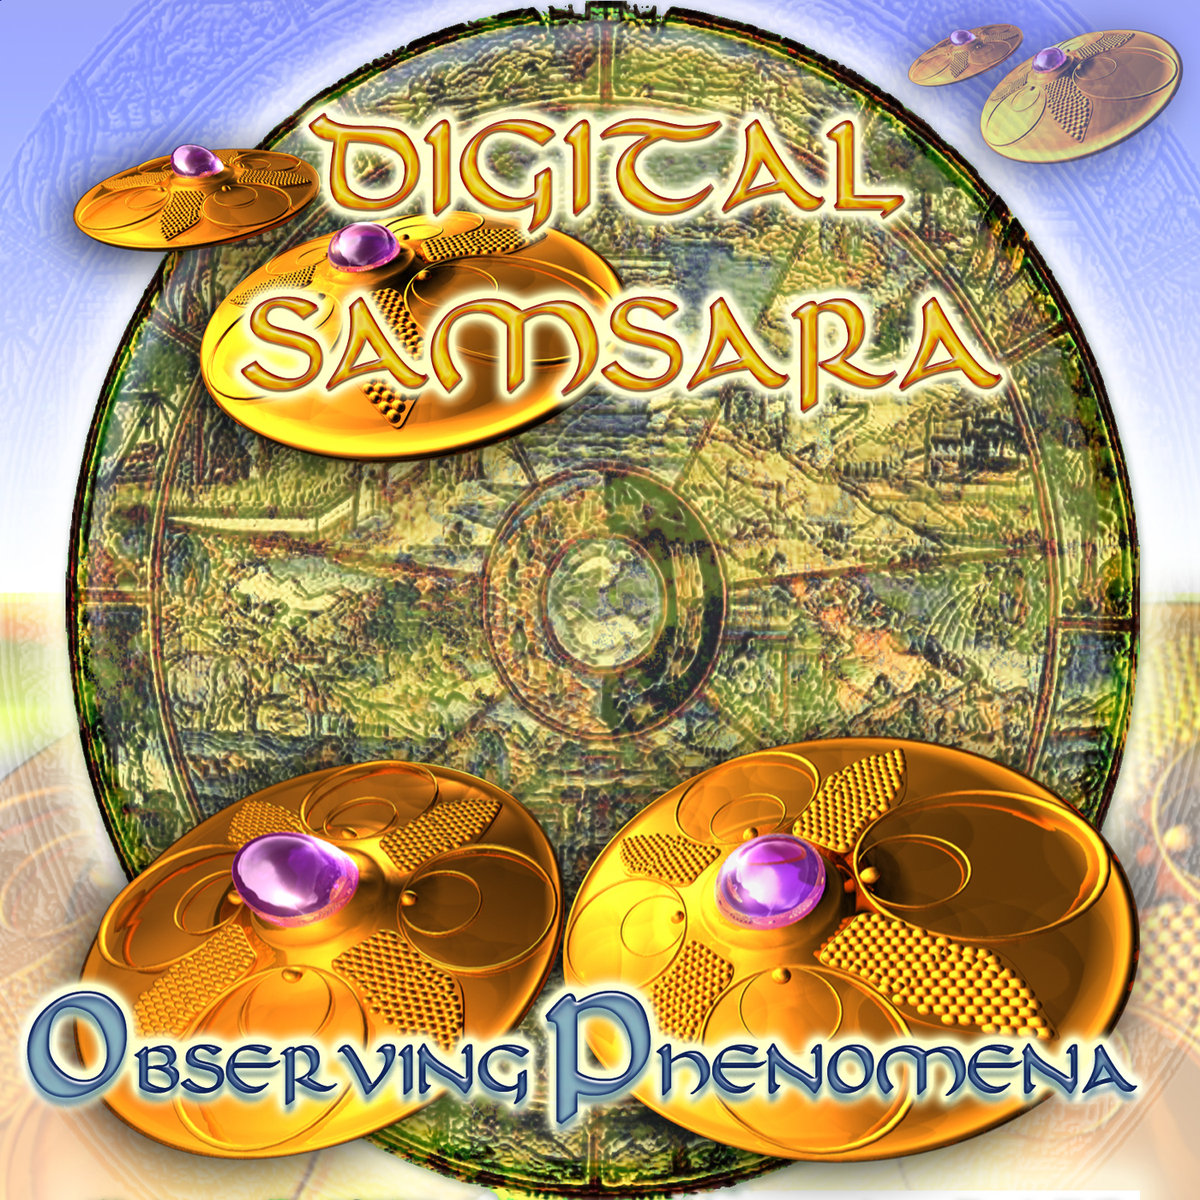 Digital Samsara - Observing Phenomena @ 'Observing Phenomena' album (electronic, goa)